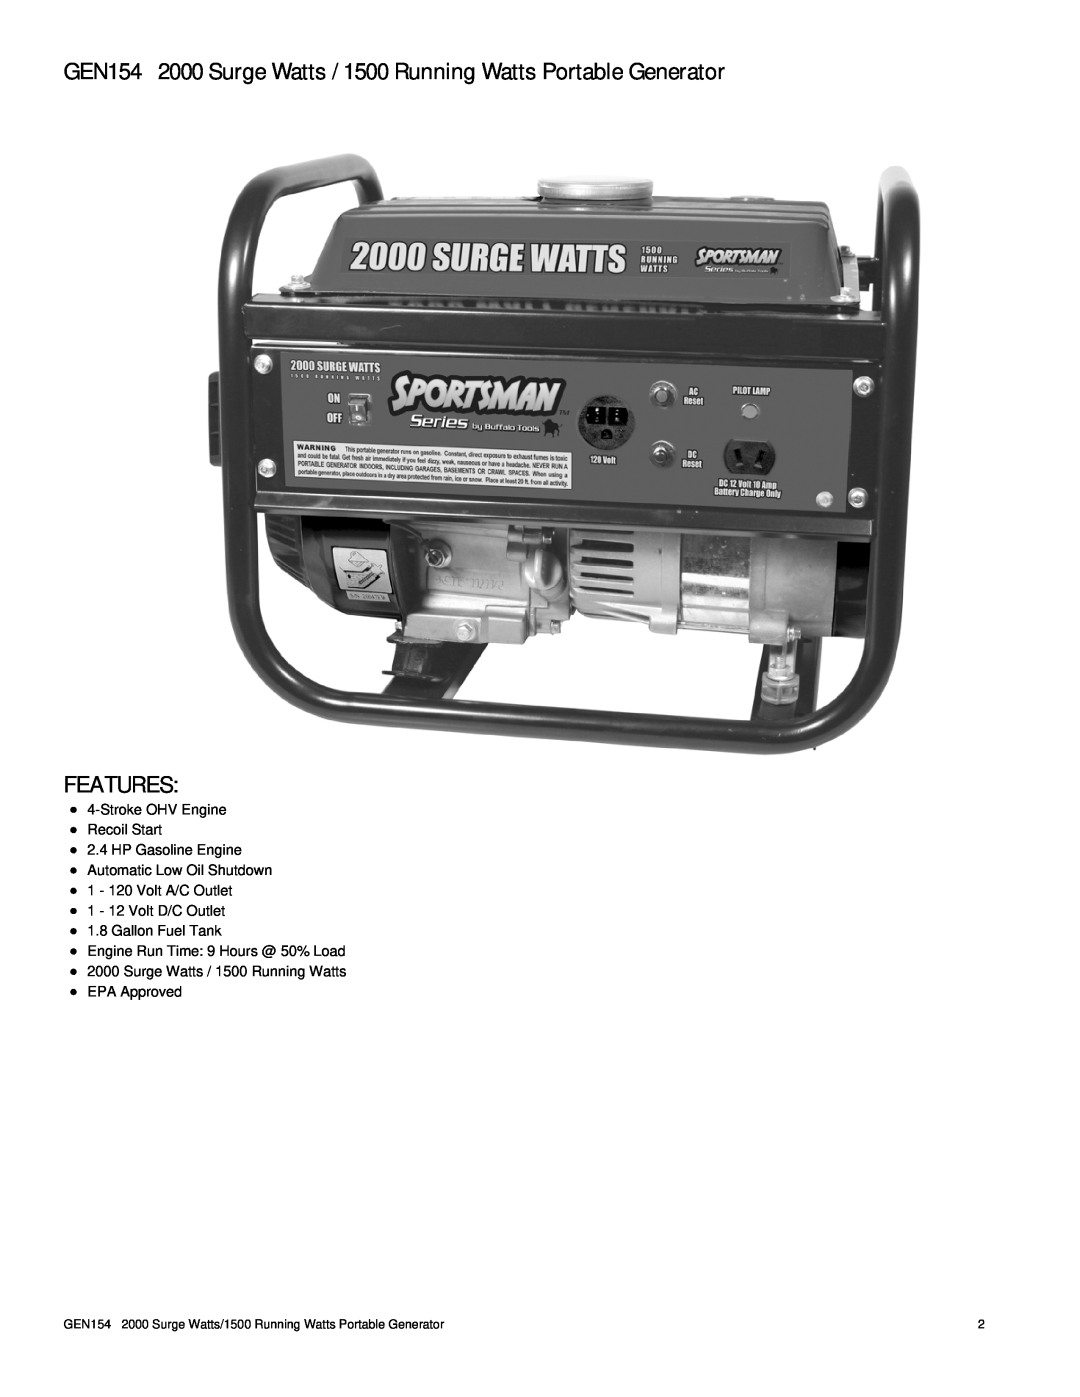 Buffalo Tools instruction manual GEN154 2000 Surge Watts / 1500 Running Watts Portable Generator, Features 